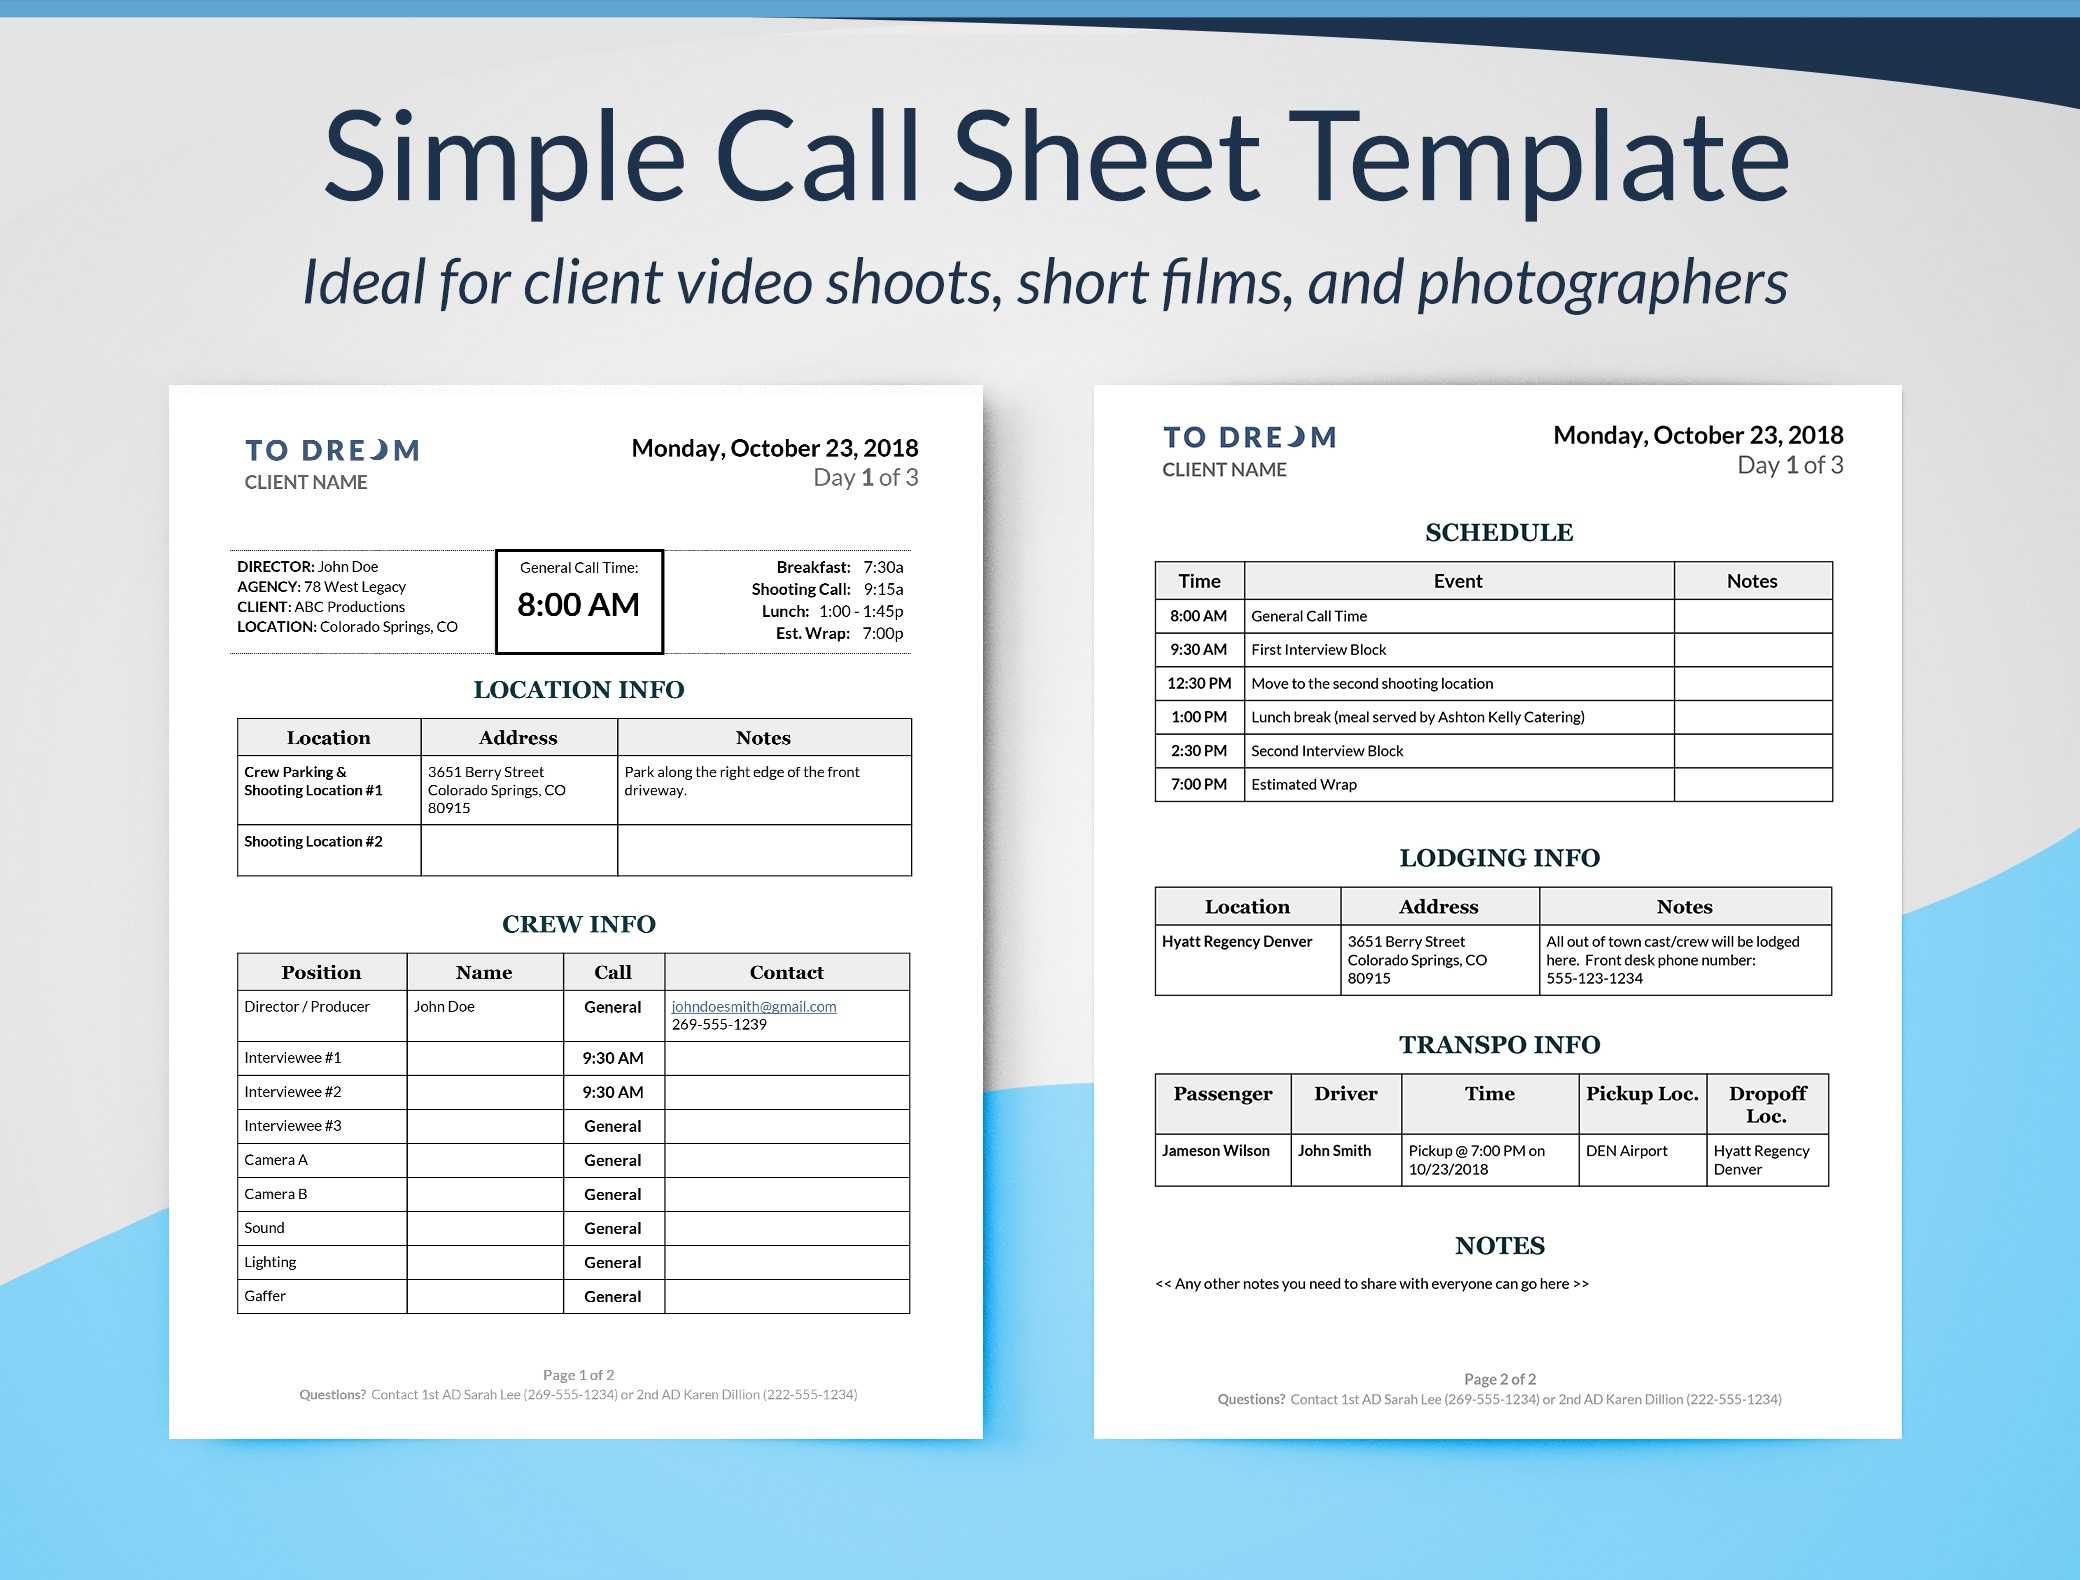 Simple Call Sheet Template Word Doc | Sethero Regarding Film Call Sheet Template Word